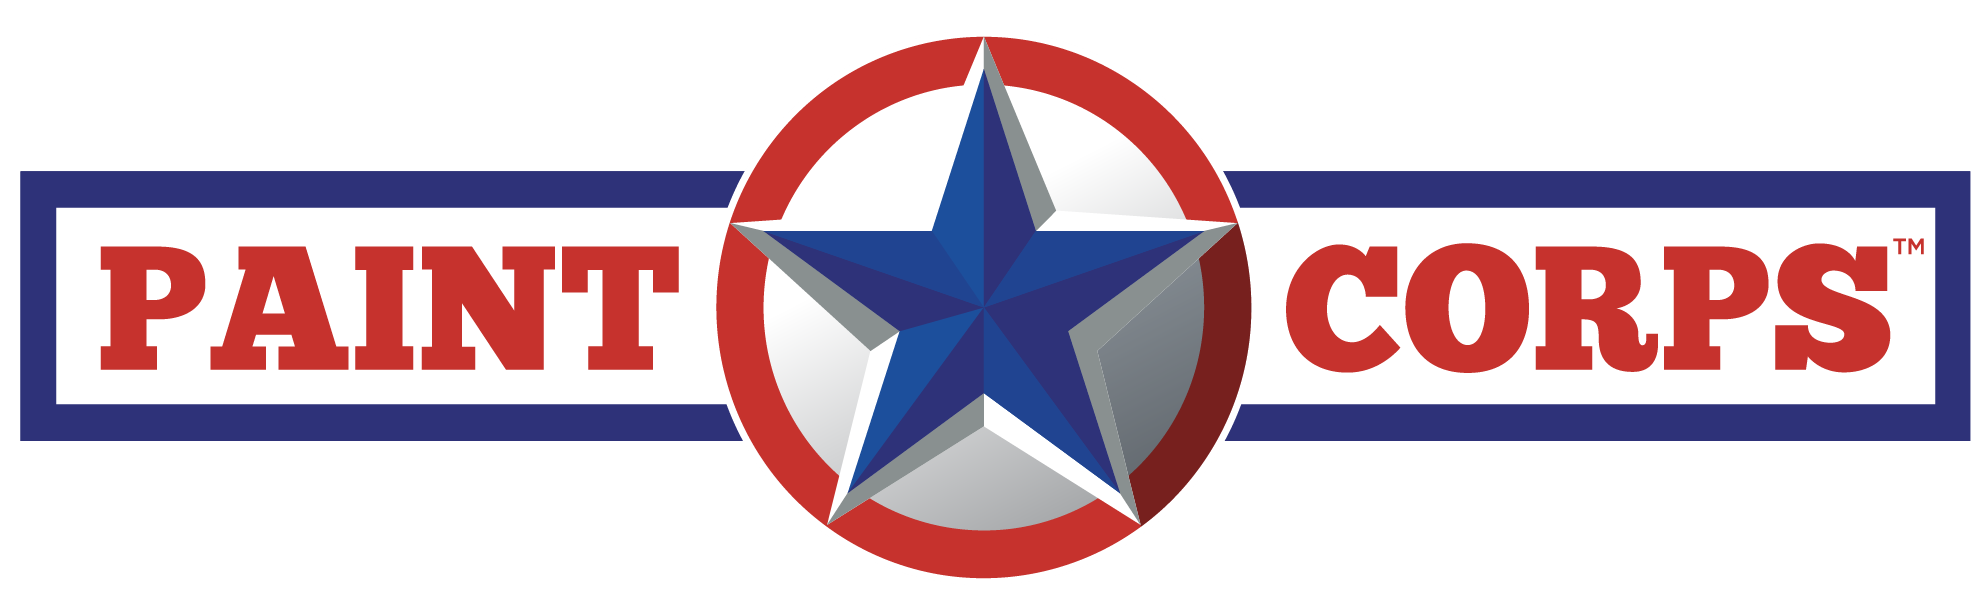 Paint Corps Logo